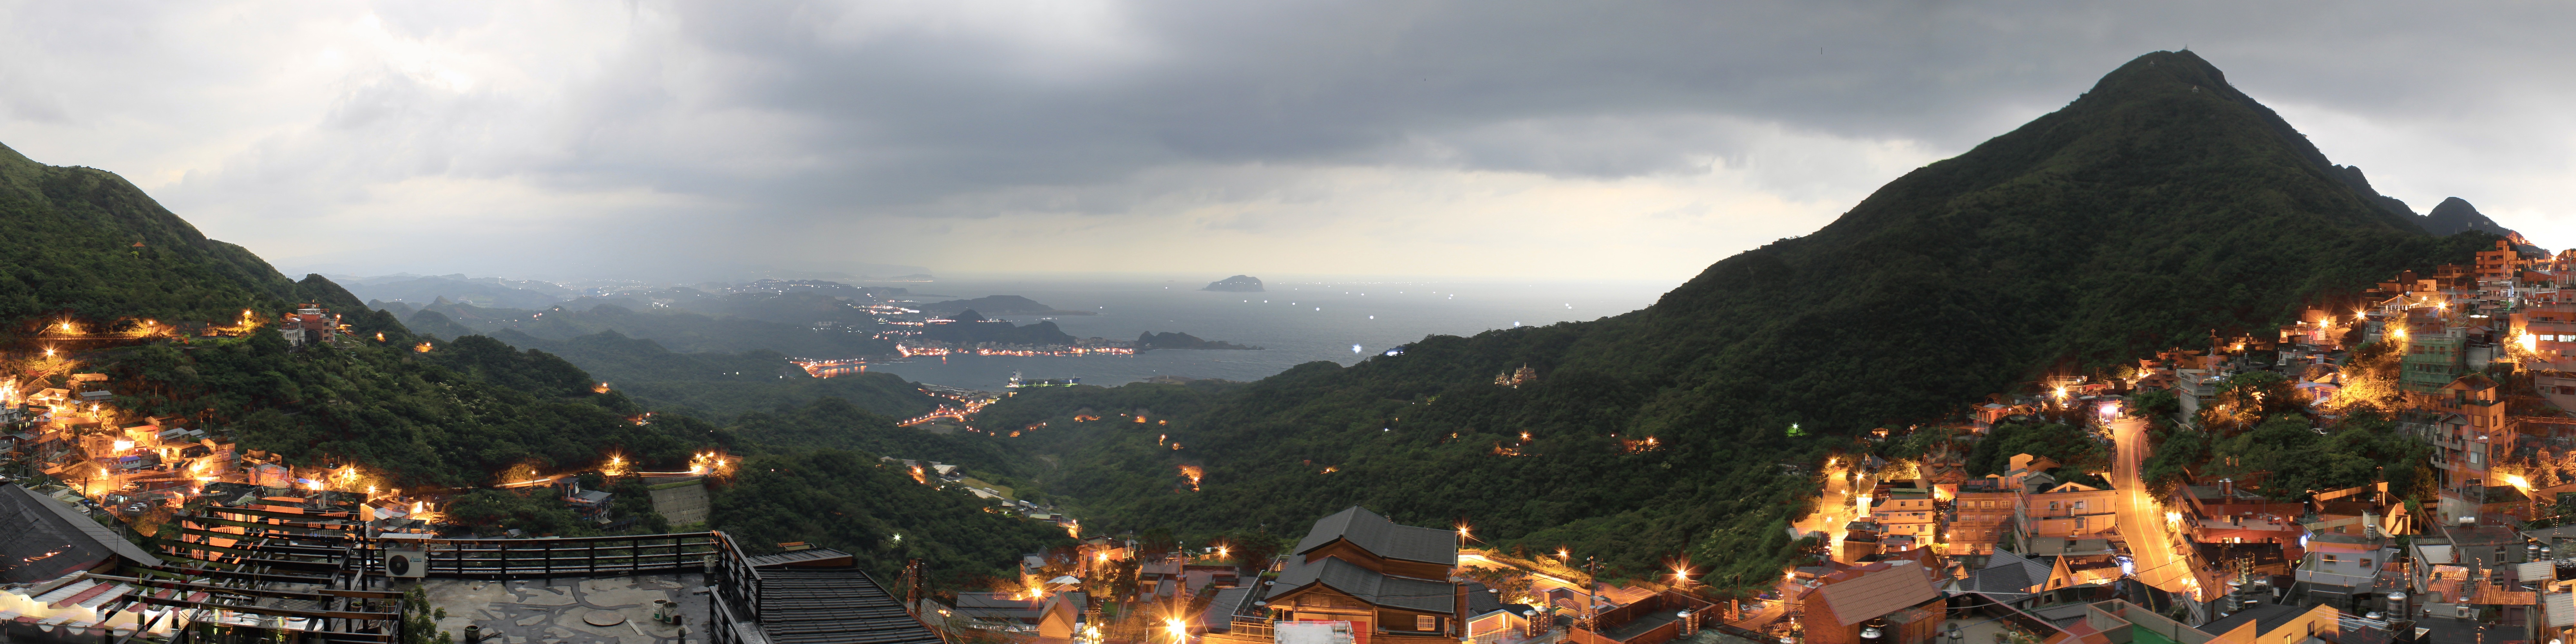 Landscape, Night Light, Building, Taiwan, building exterior, mountain